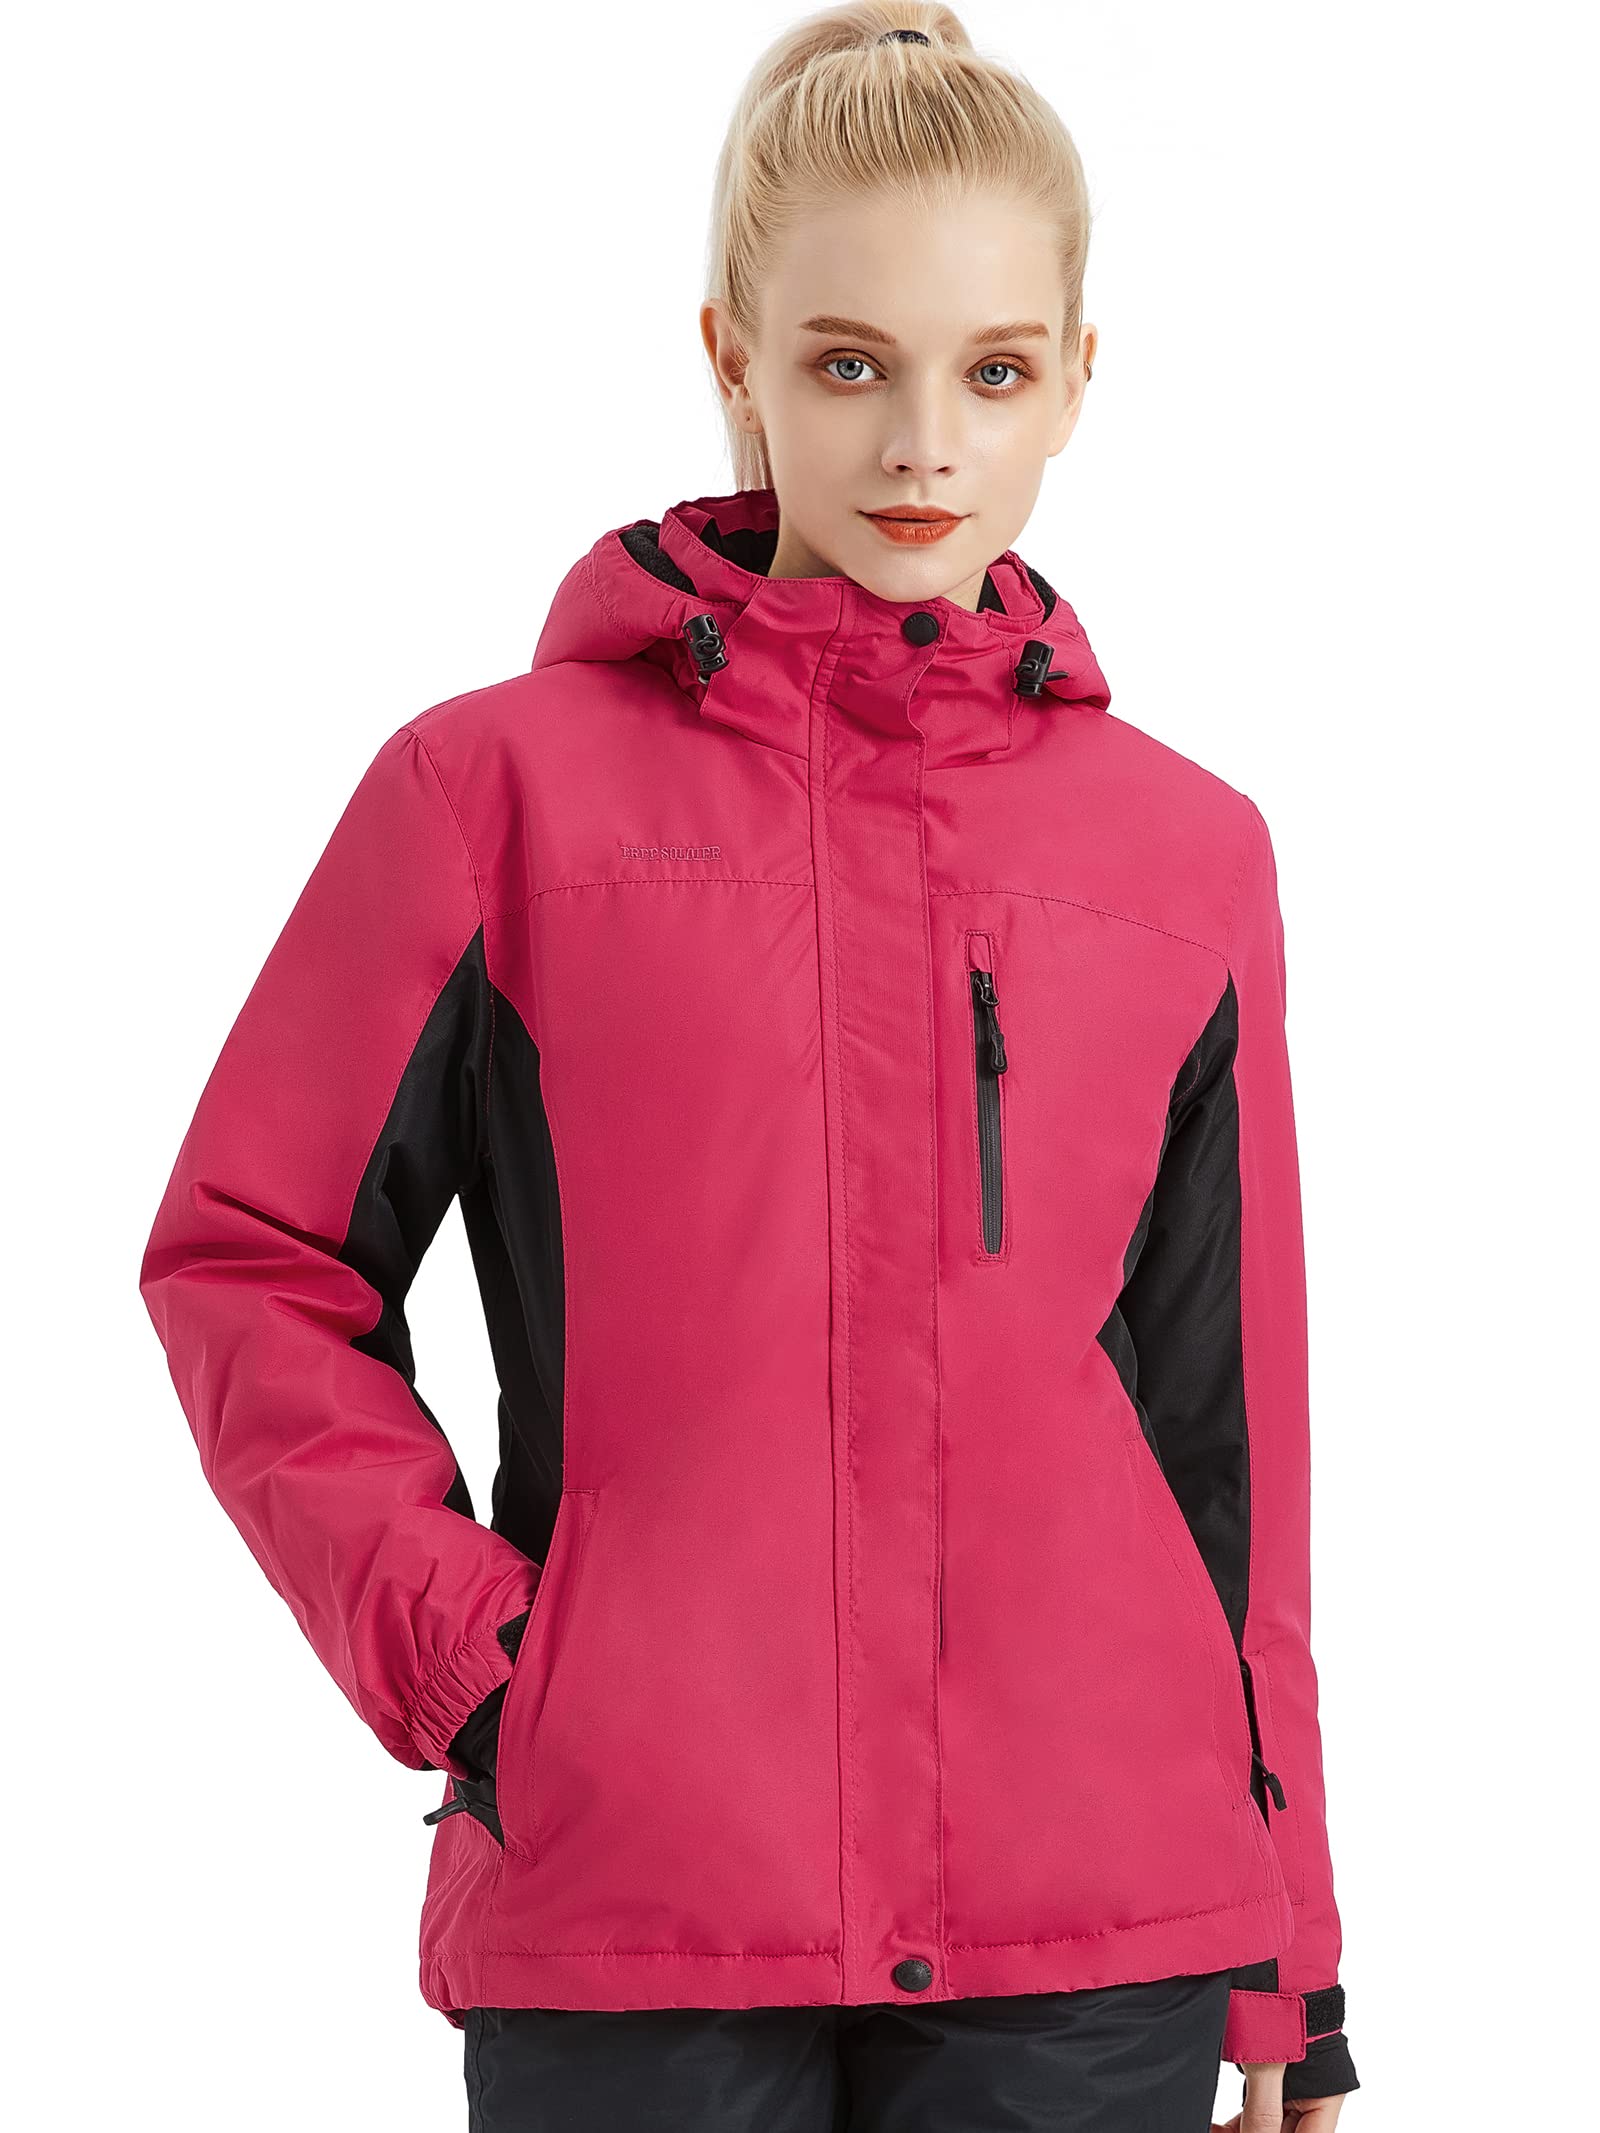 FREE SOLDIER Womens Waterproof Ski Snow Jacket Fleece Lined Warm Winter Rain Jacket with Hood Fully Taped Seams(Rose Red,S)